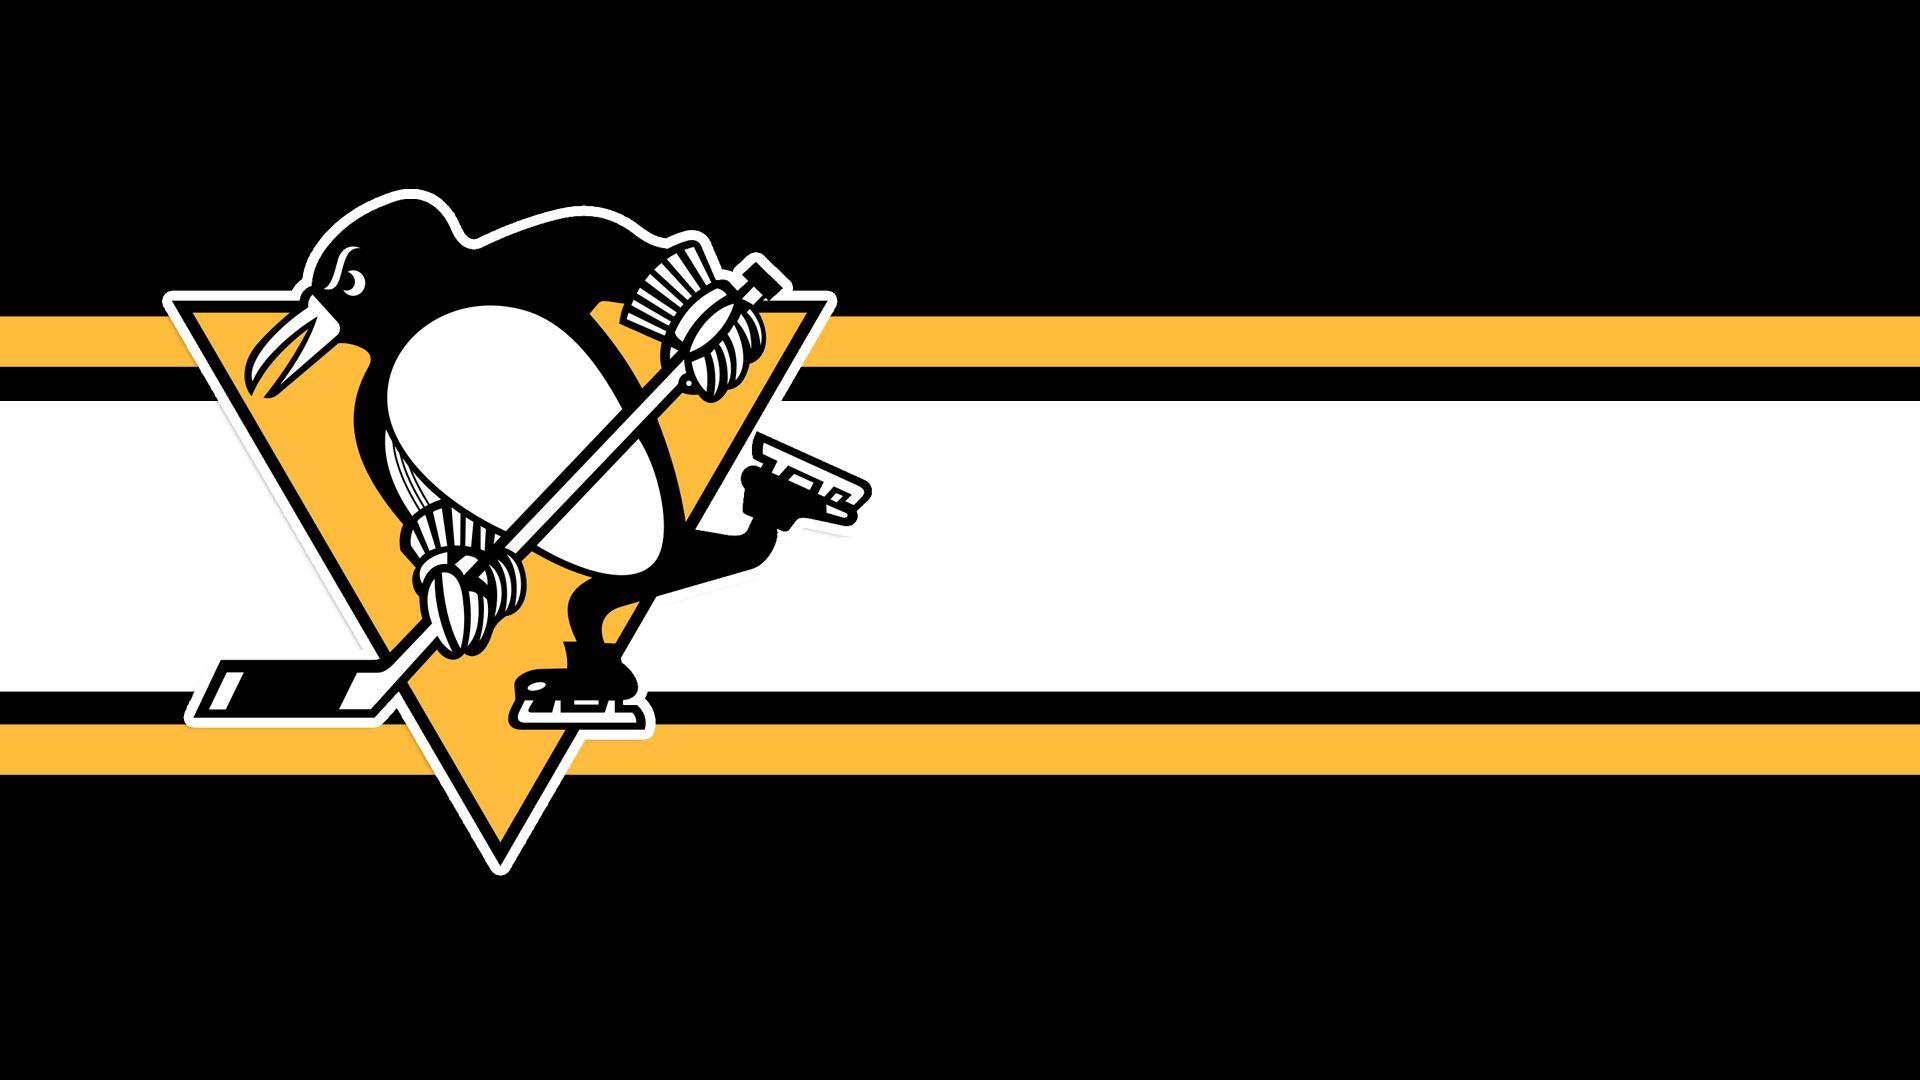 Pittsburgh Penguins 2018 Wallpapers Wallpaper Cave